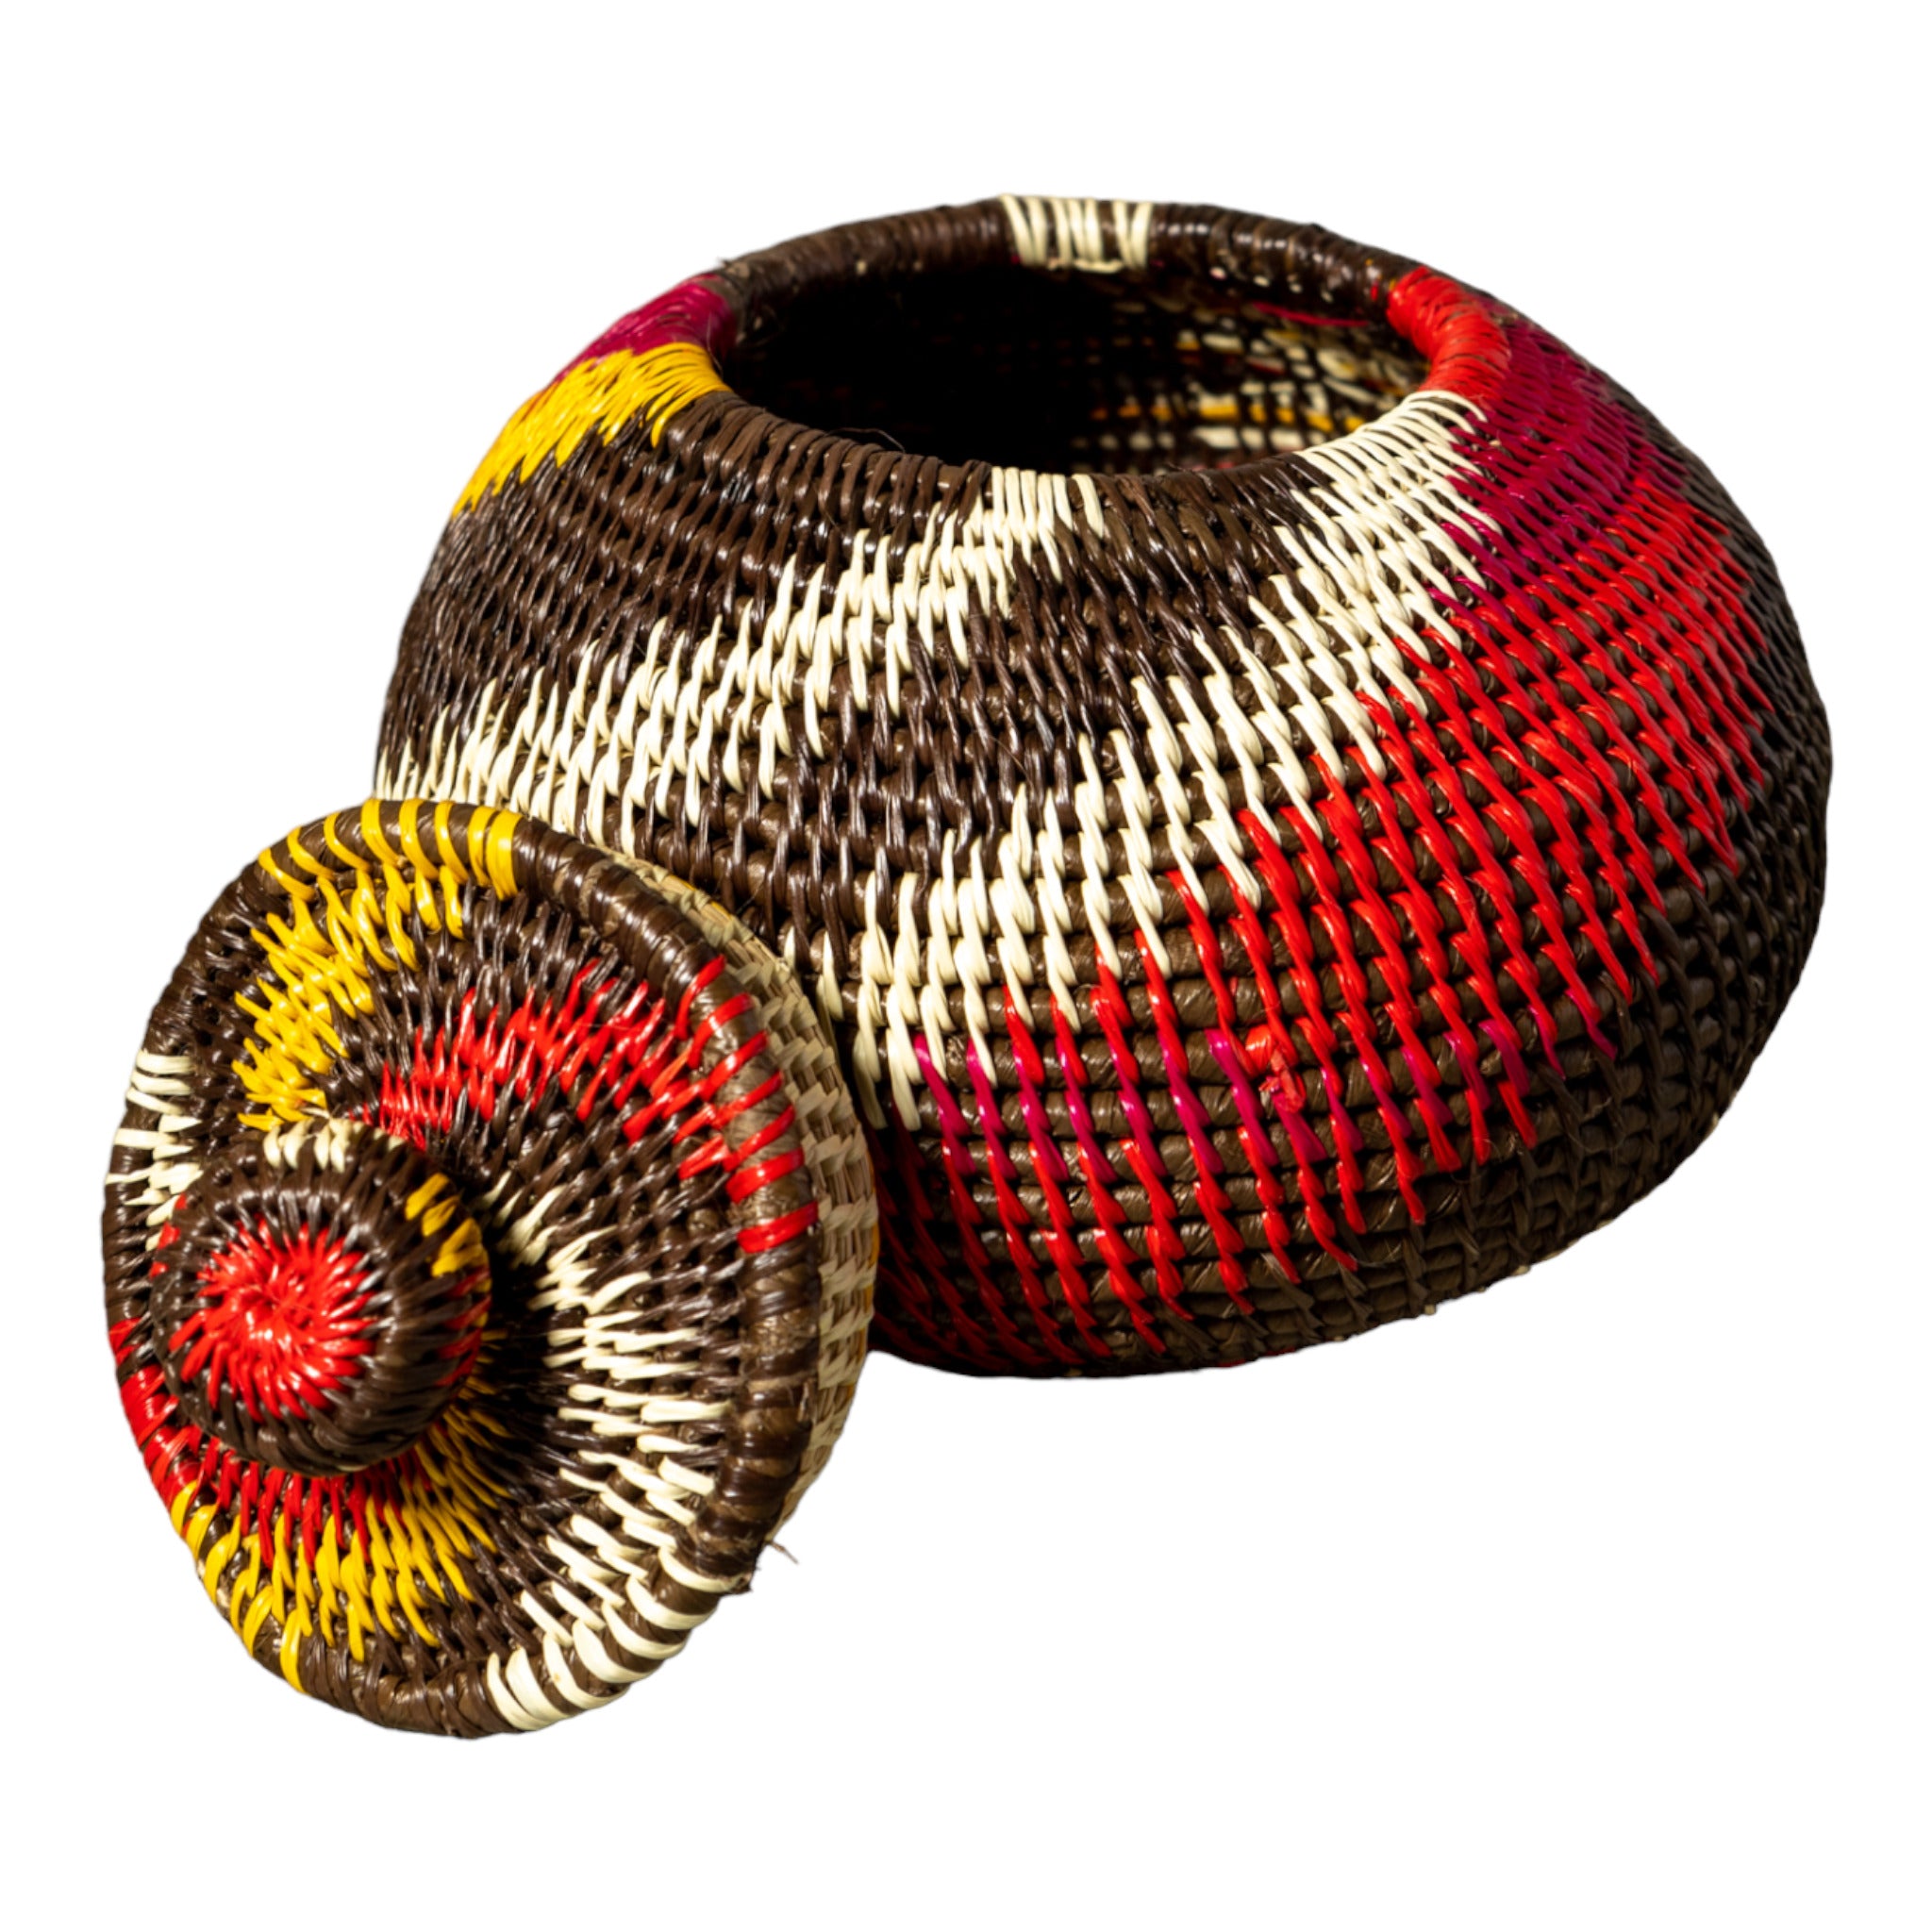 Wild Rainbow Swirl Woven Basket With Top